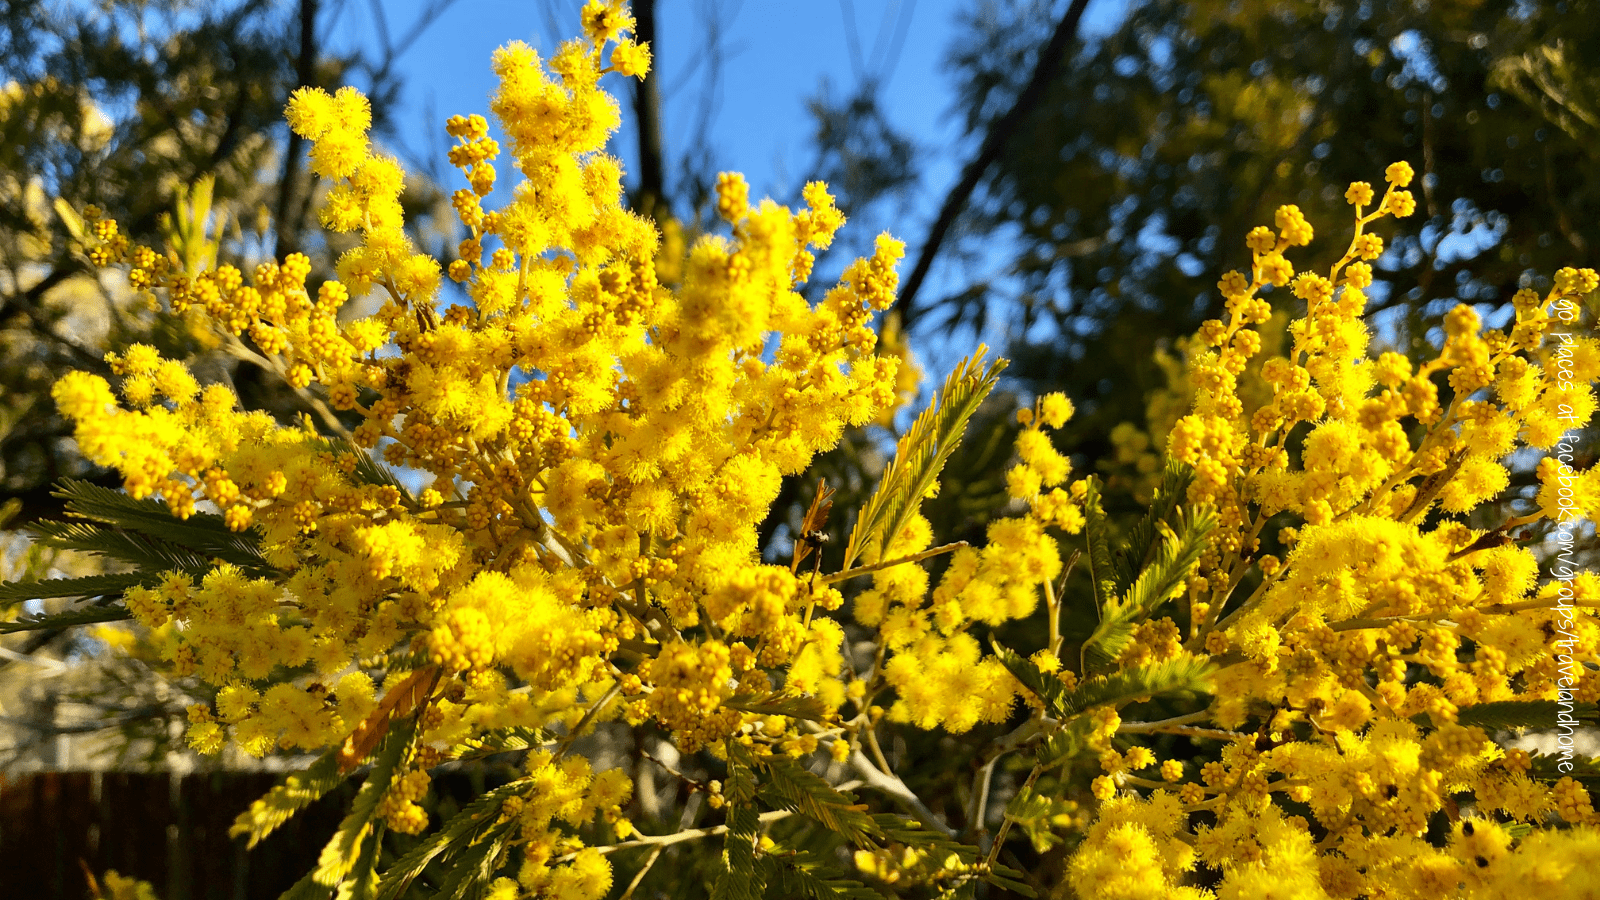 Golden Wattles Australia flowers in bloom